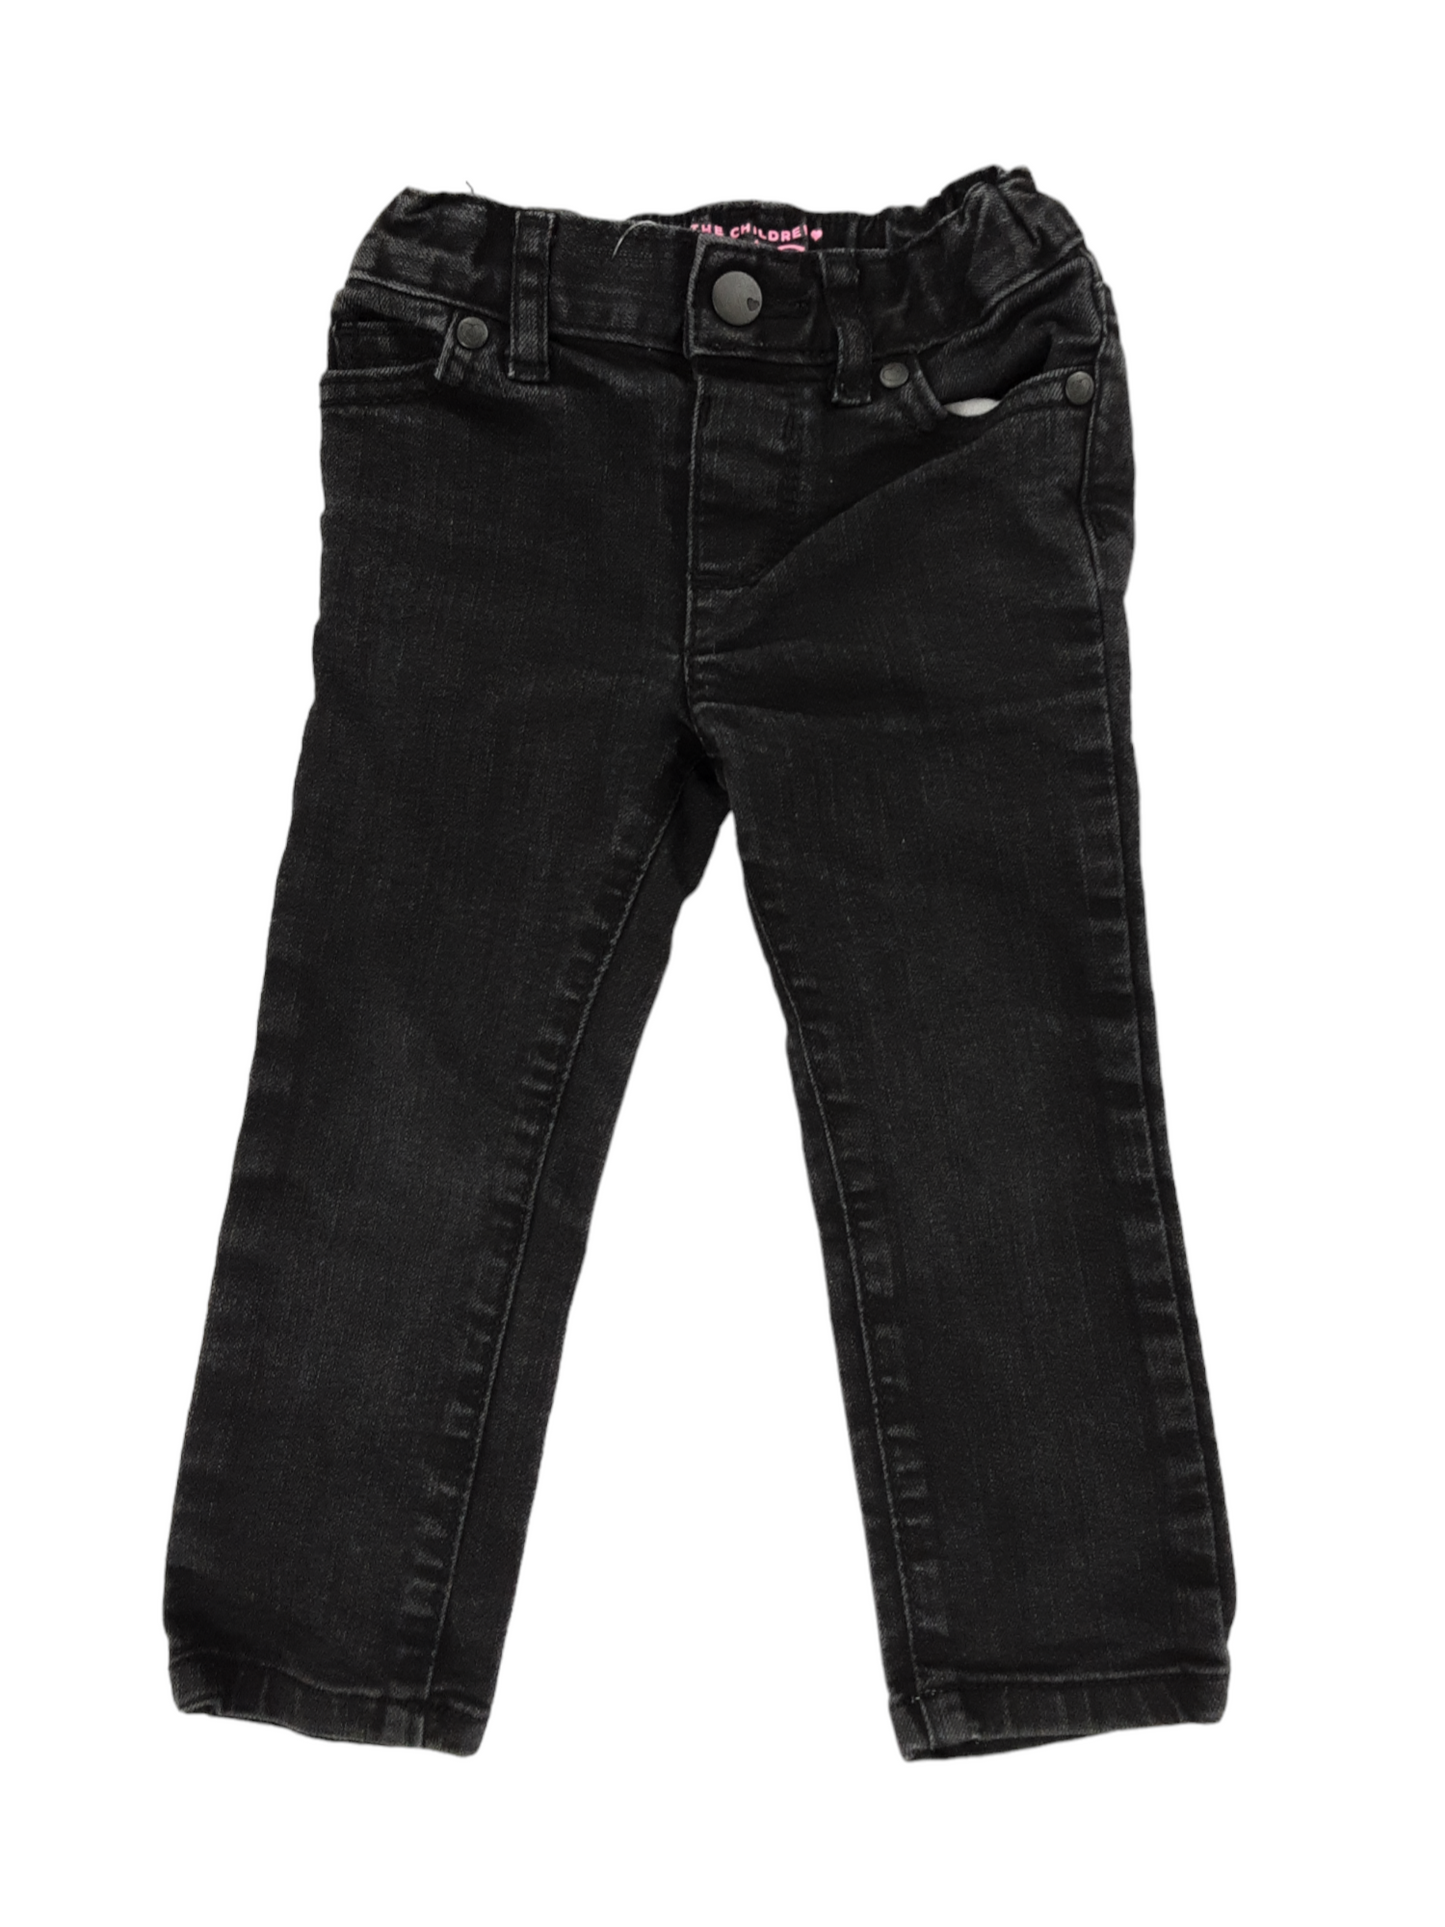 2t black jeans